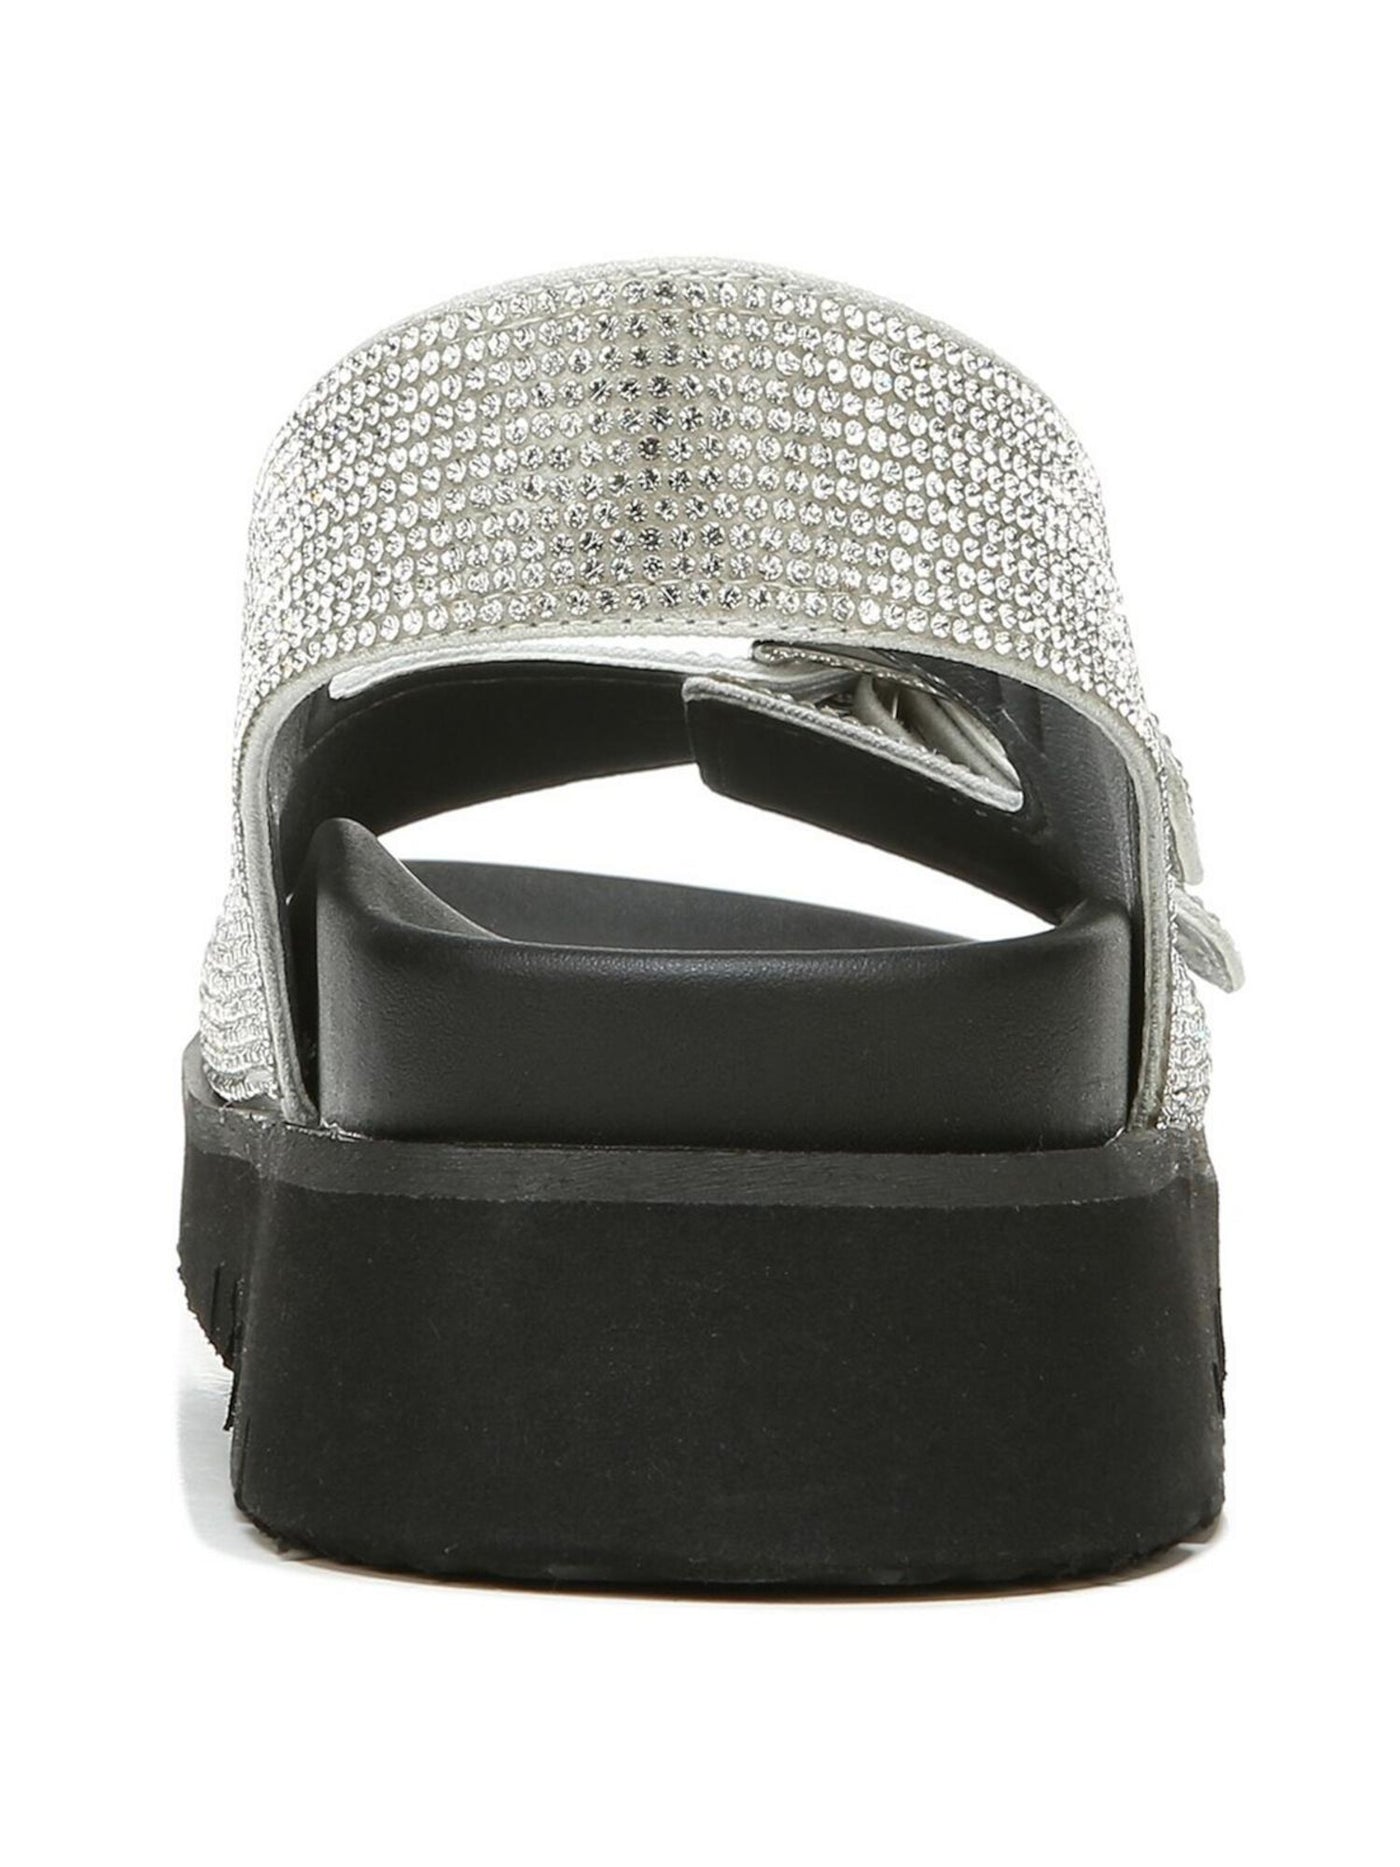 BAR III Womens Silver Sport Embellished Adjustable Kiwi Round Toe Buckle Sandals Shoes 7 M